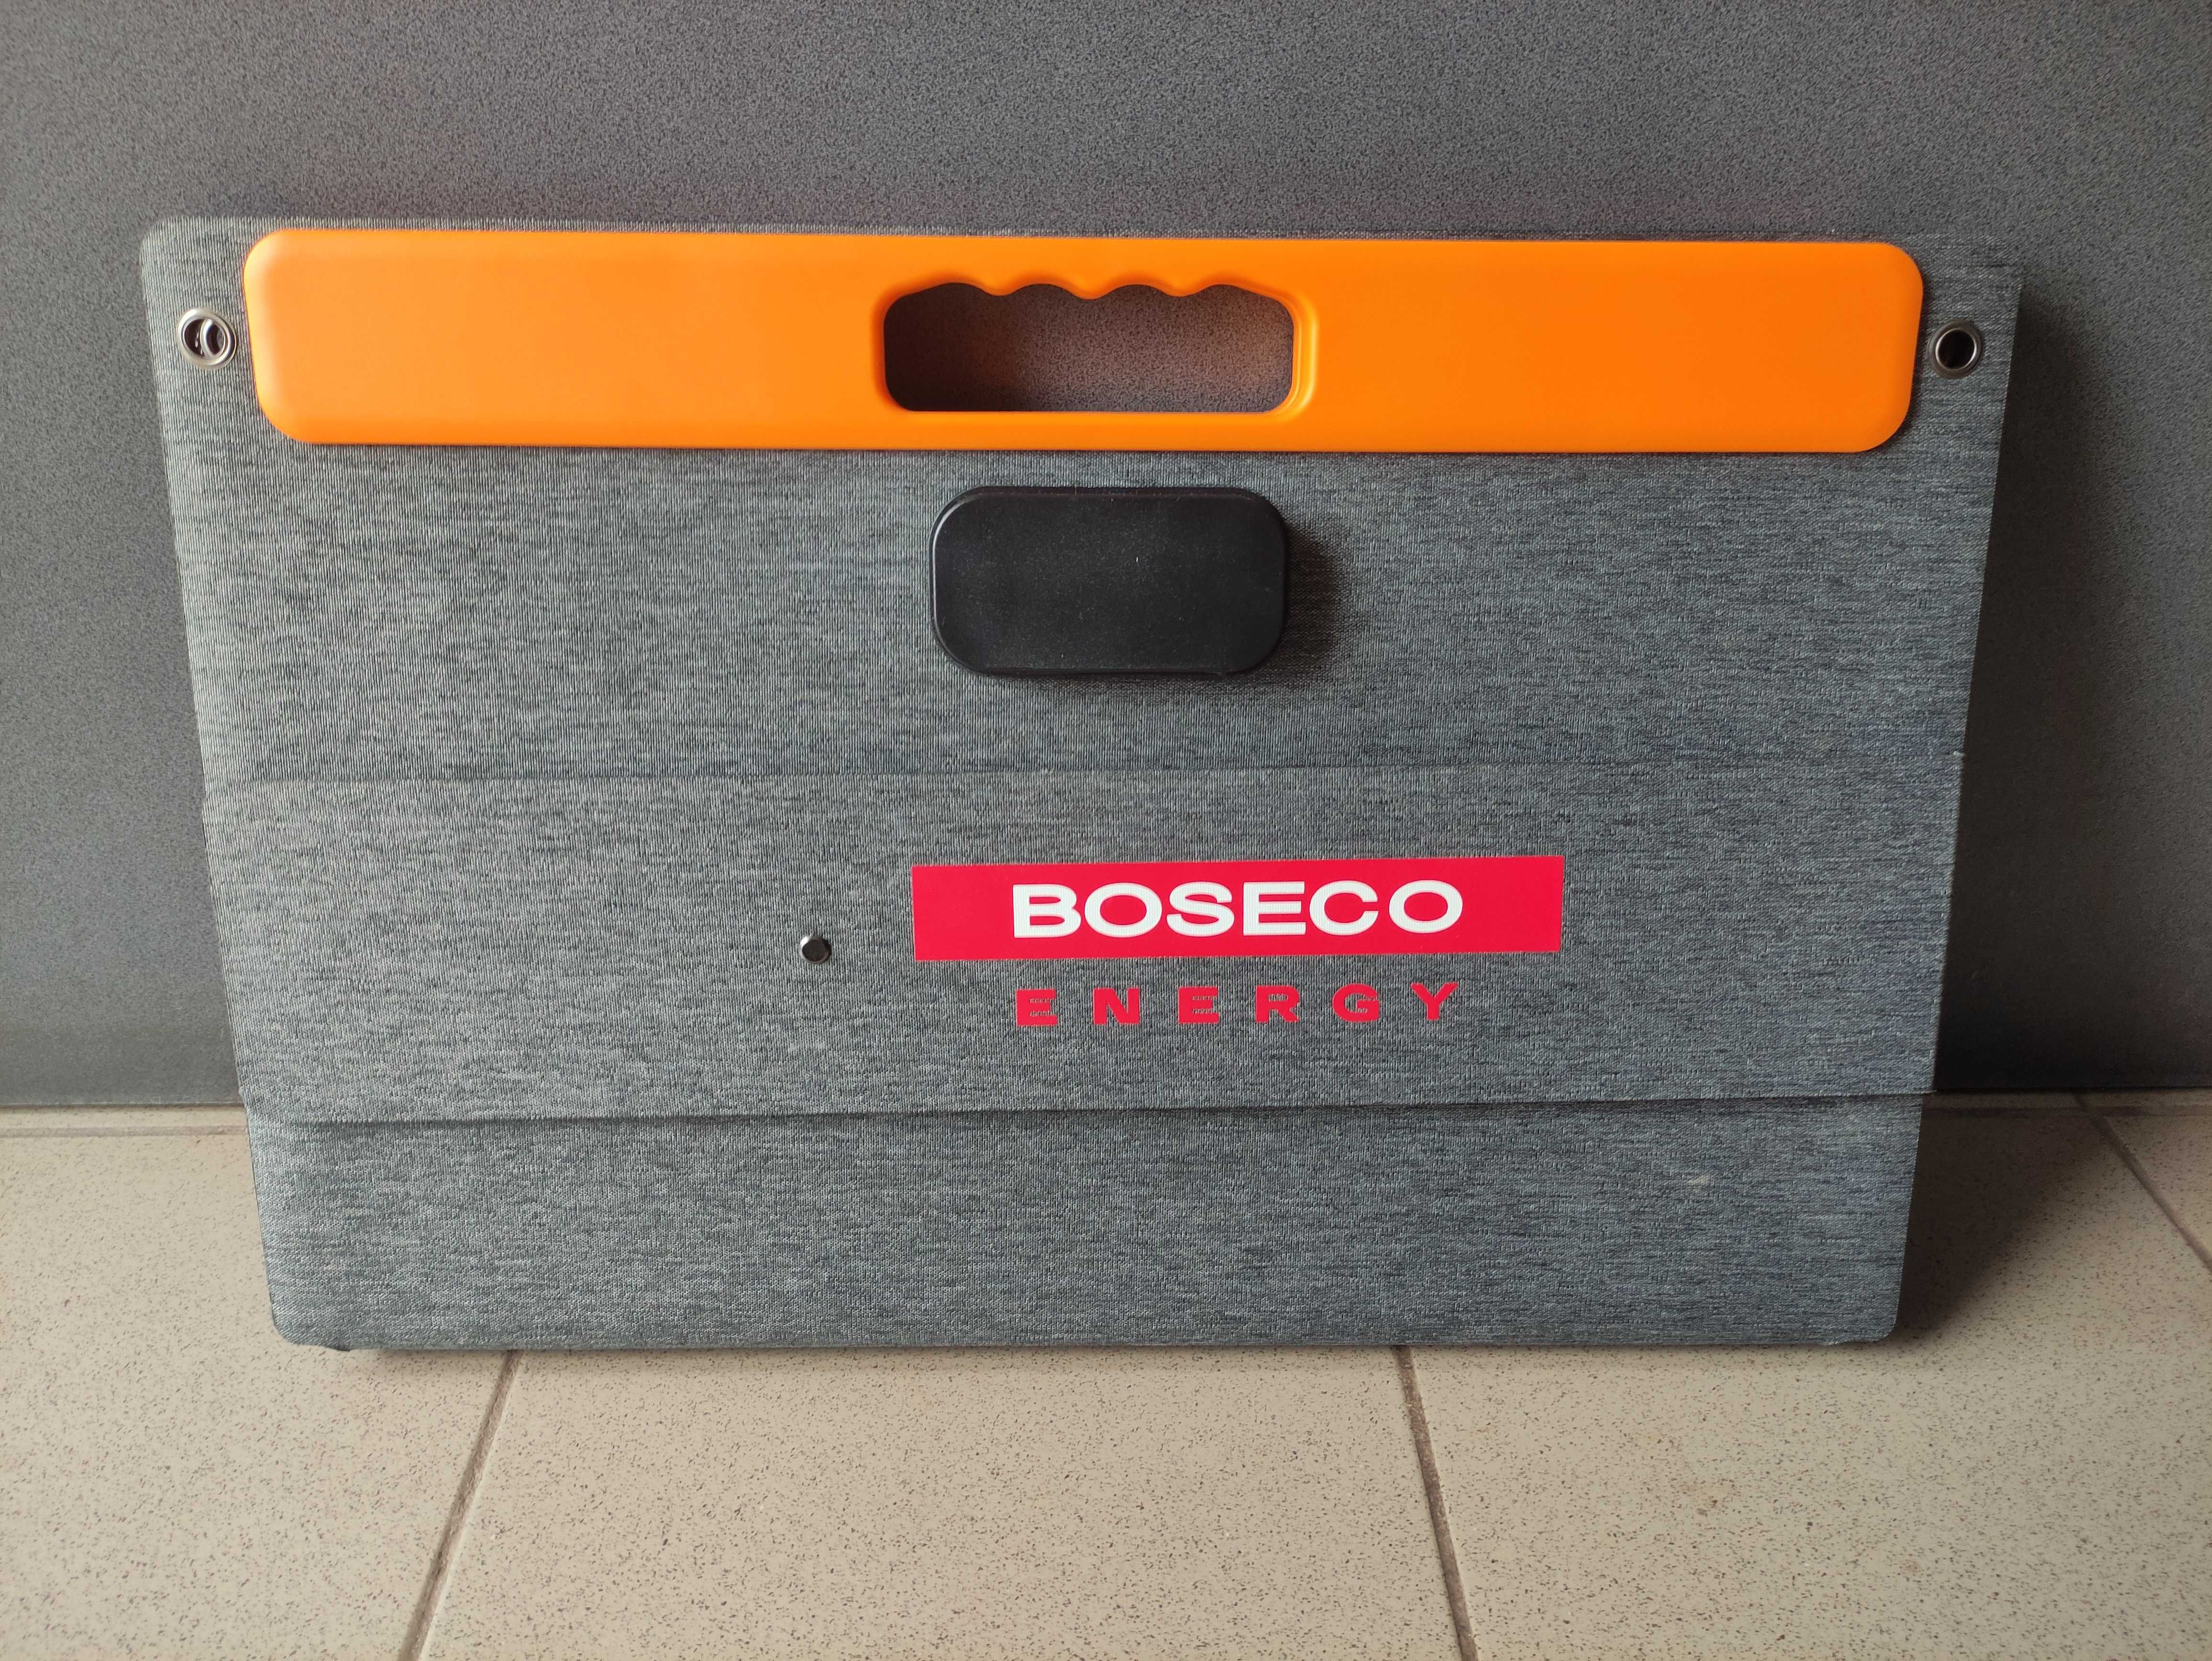 Портативна сонячна панель Boseco Energy sp 100 ват